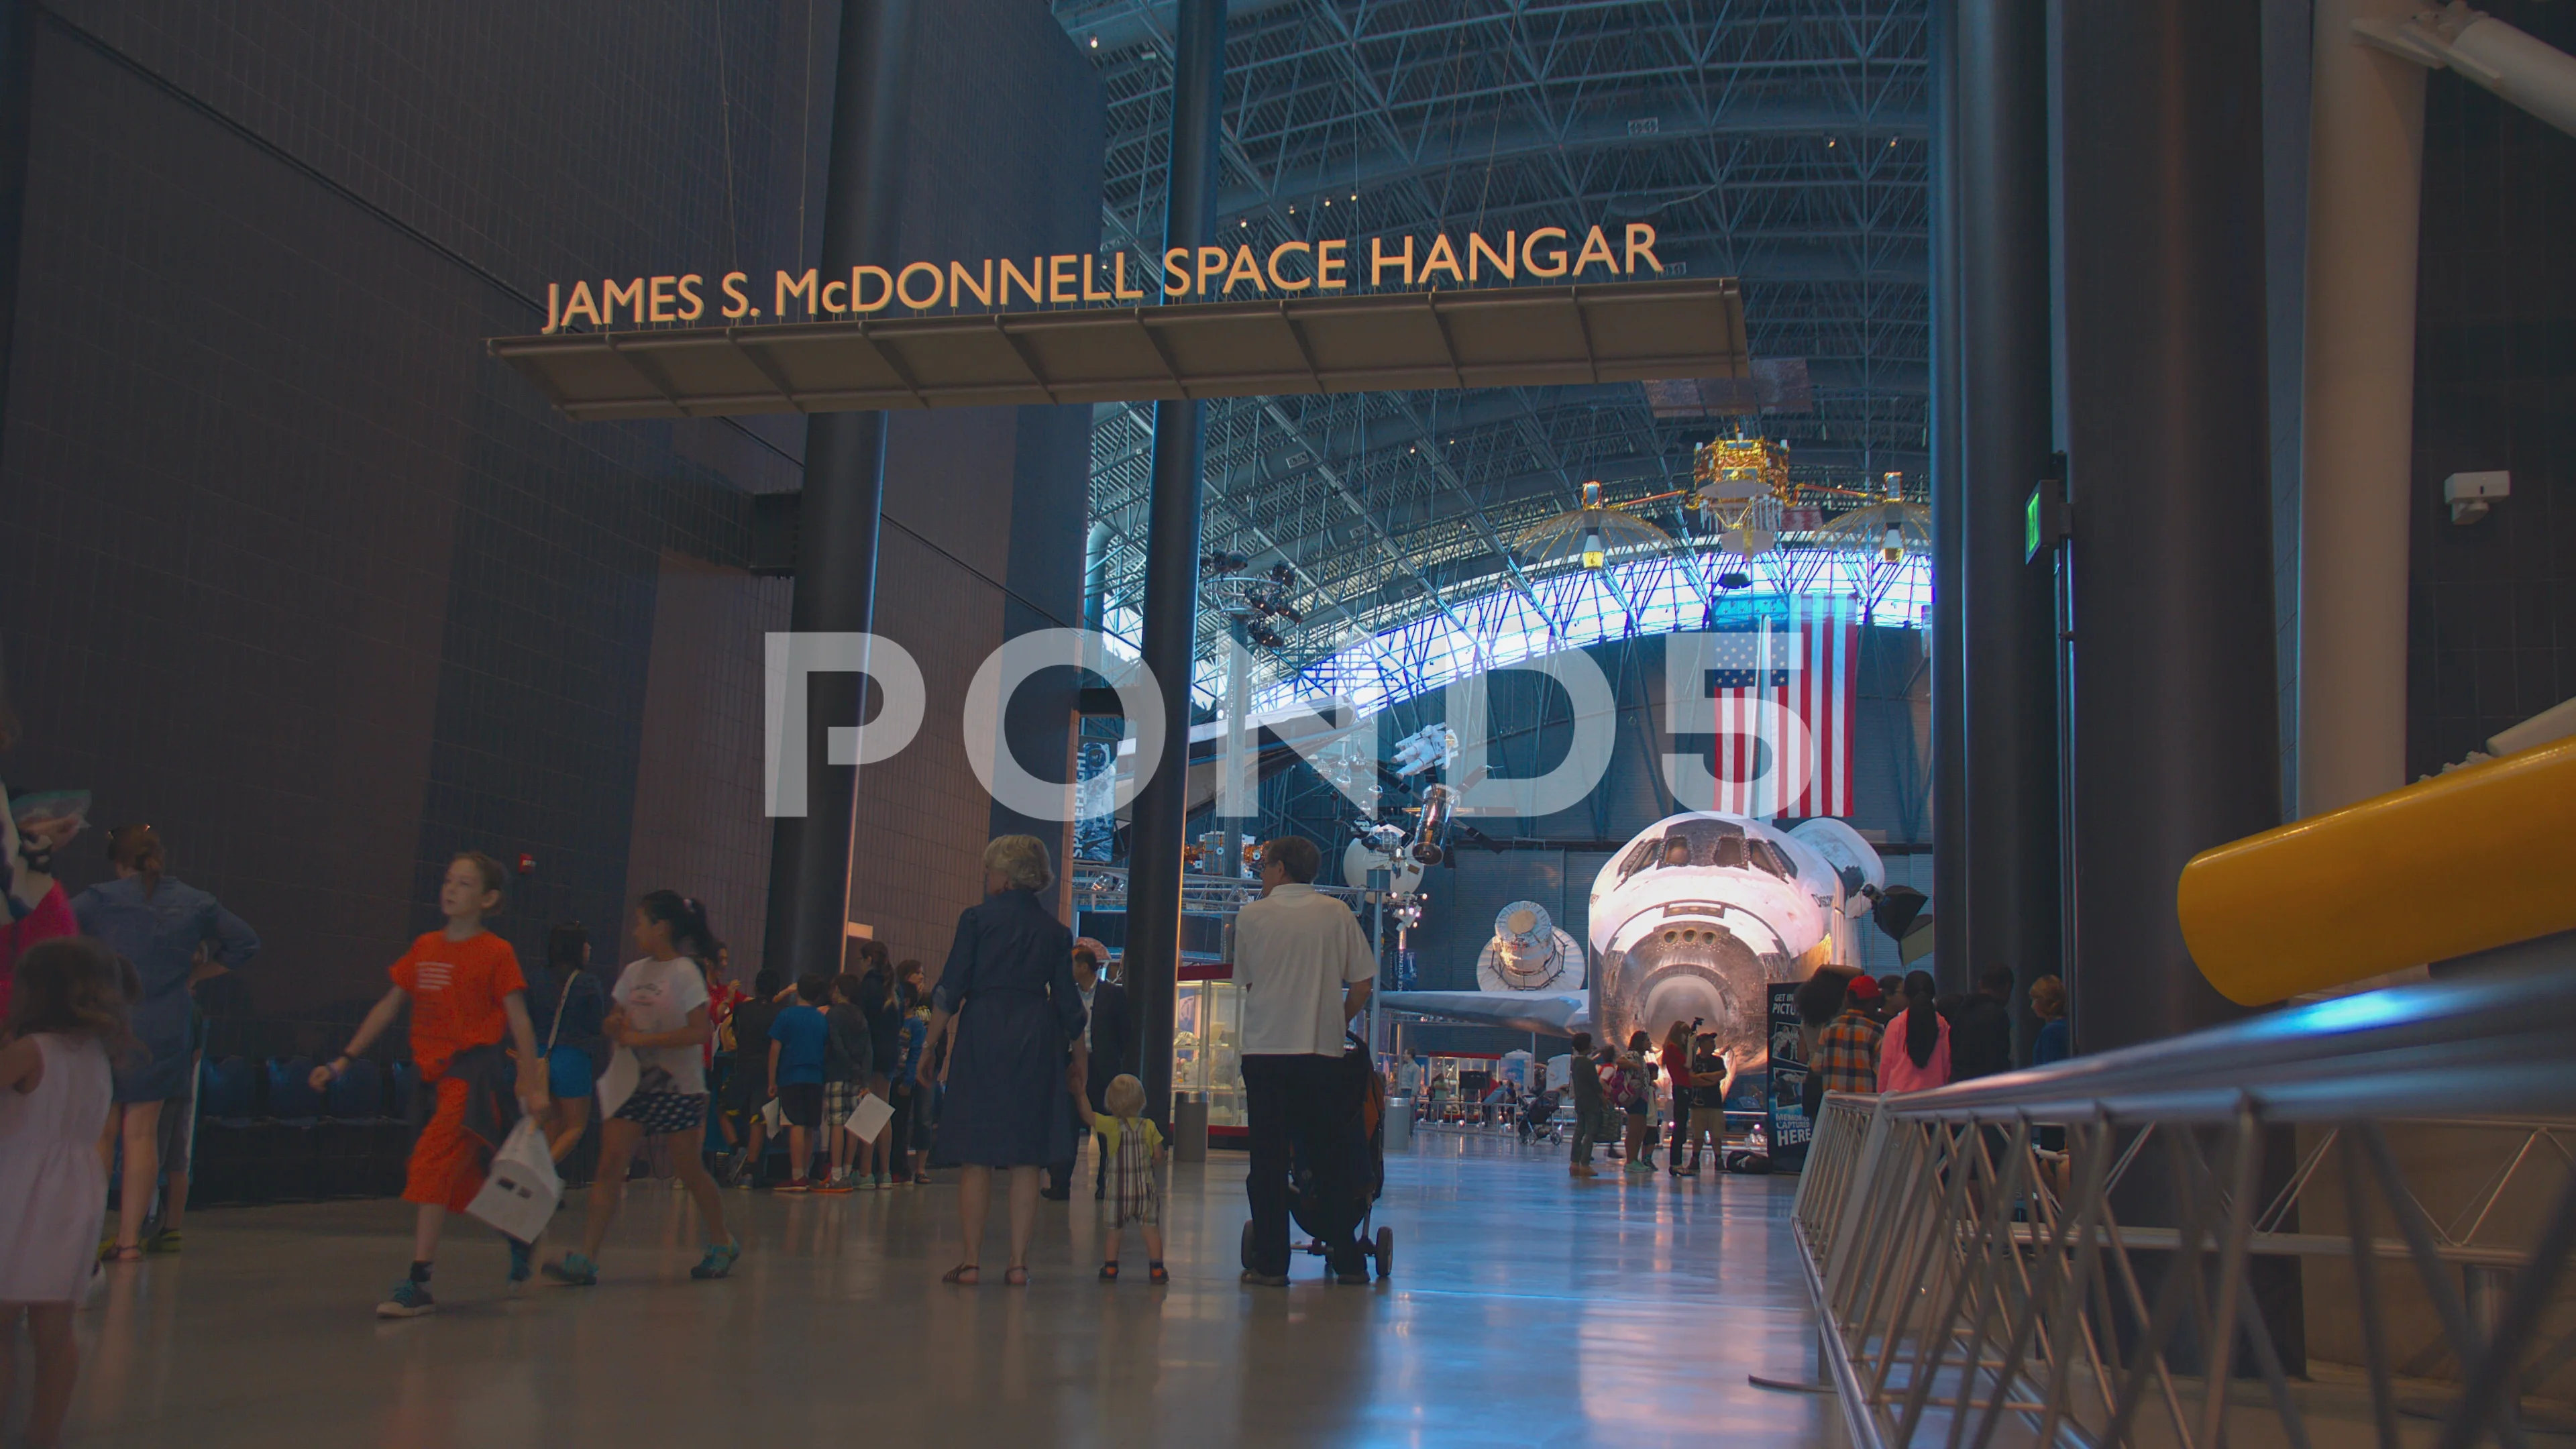 McDonnell Space Hangar